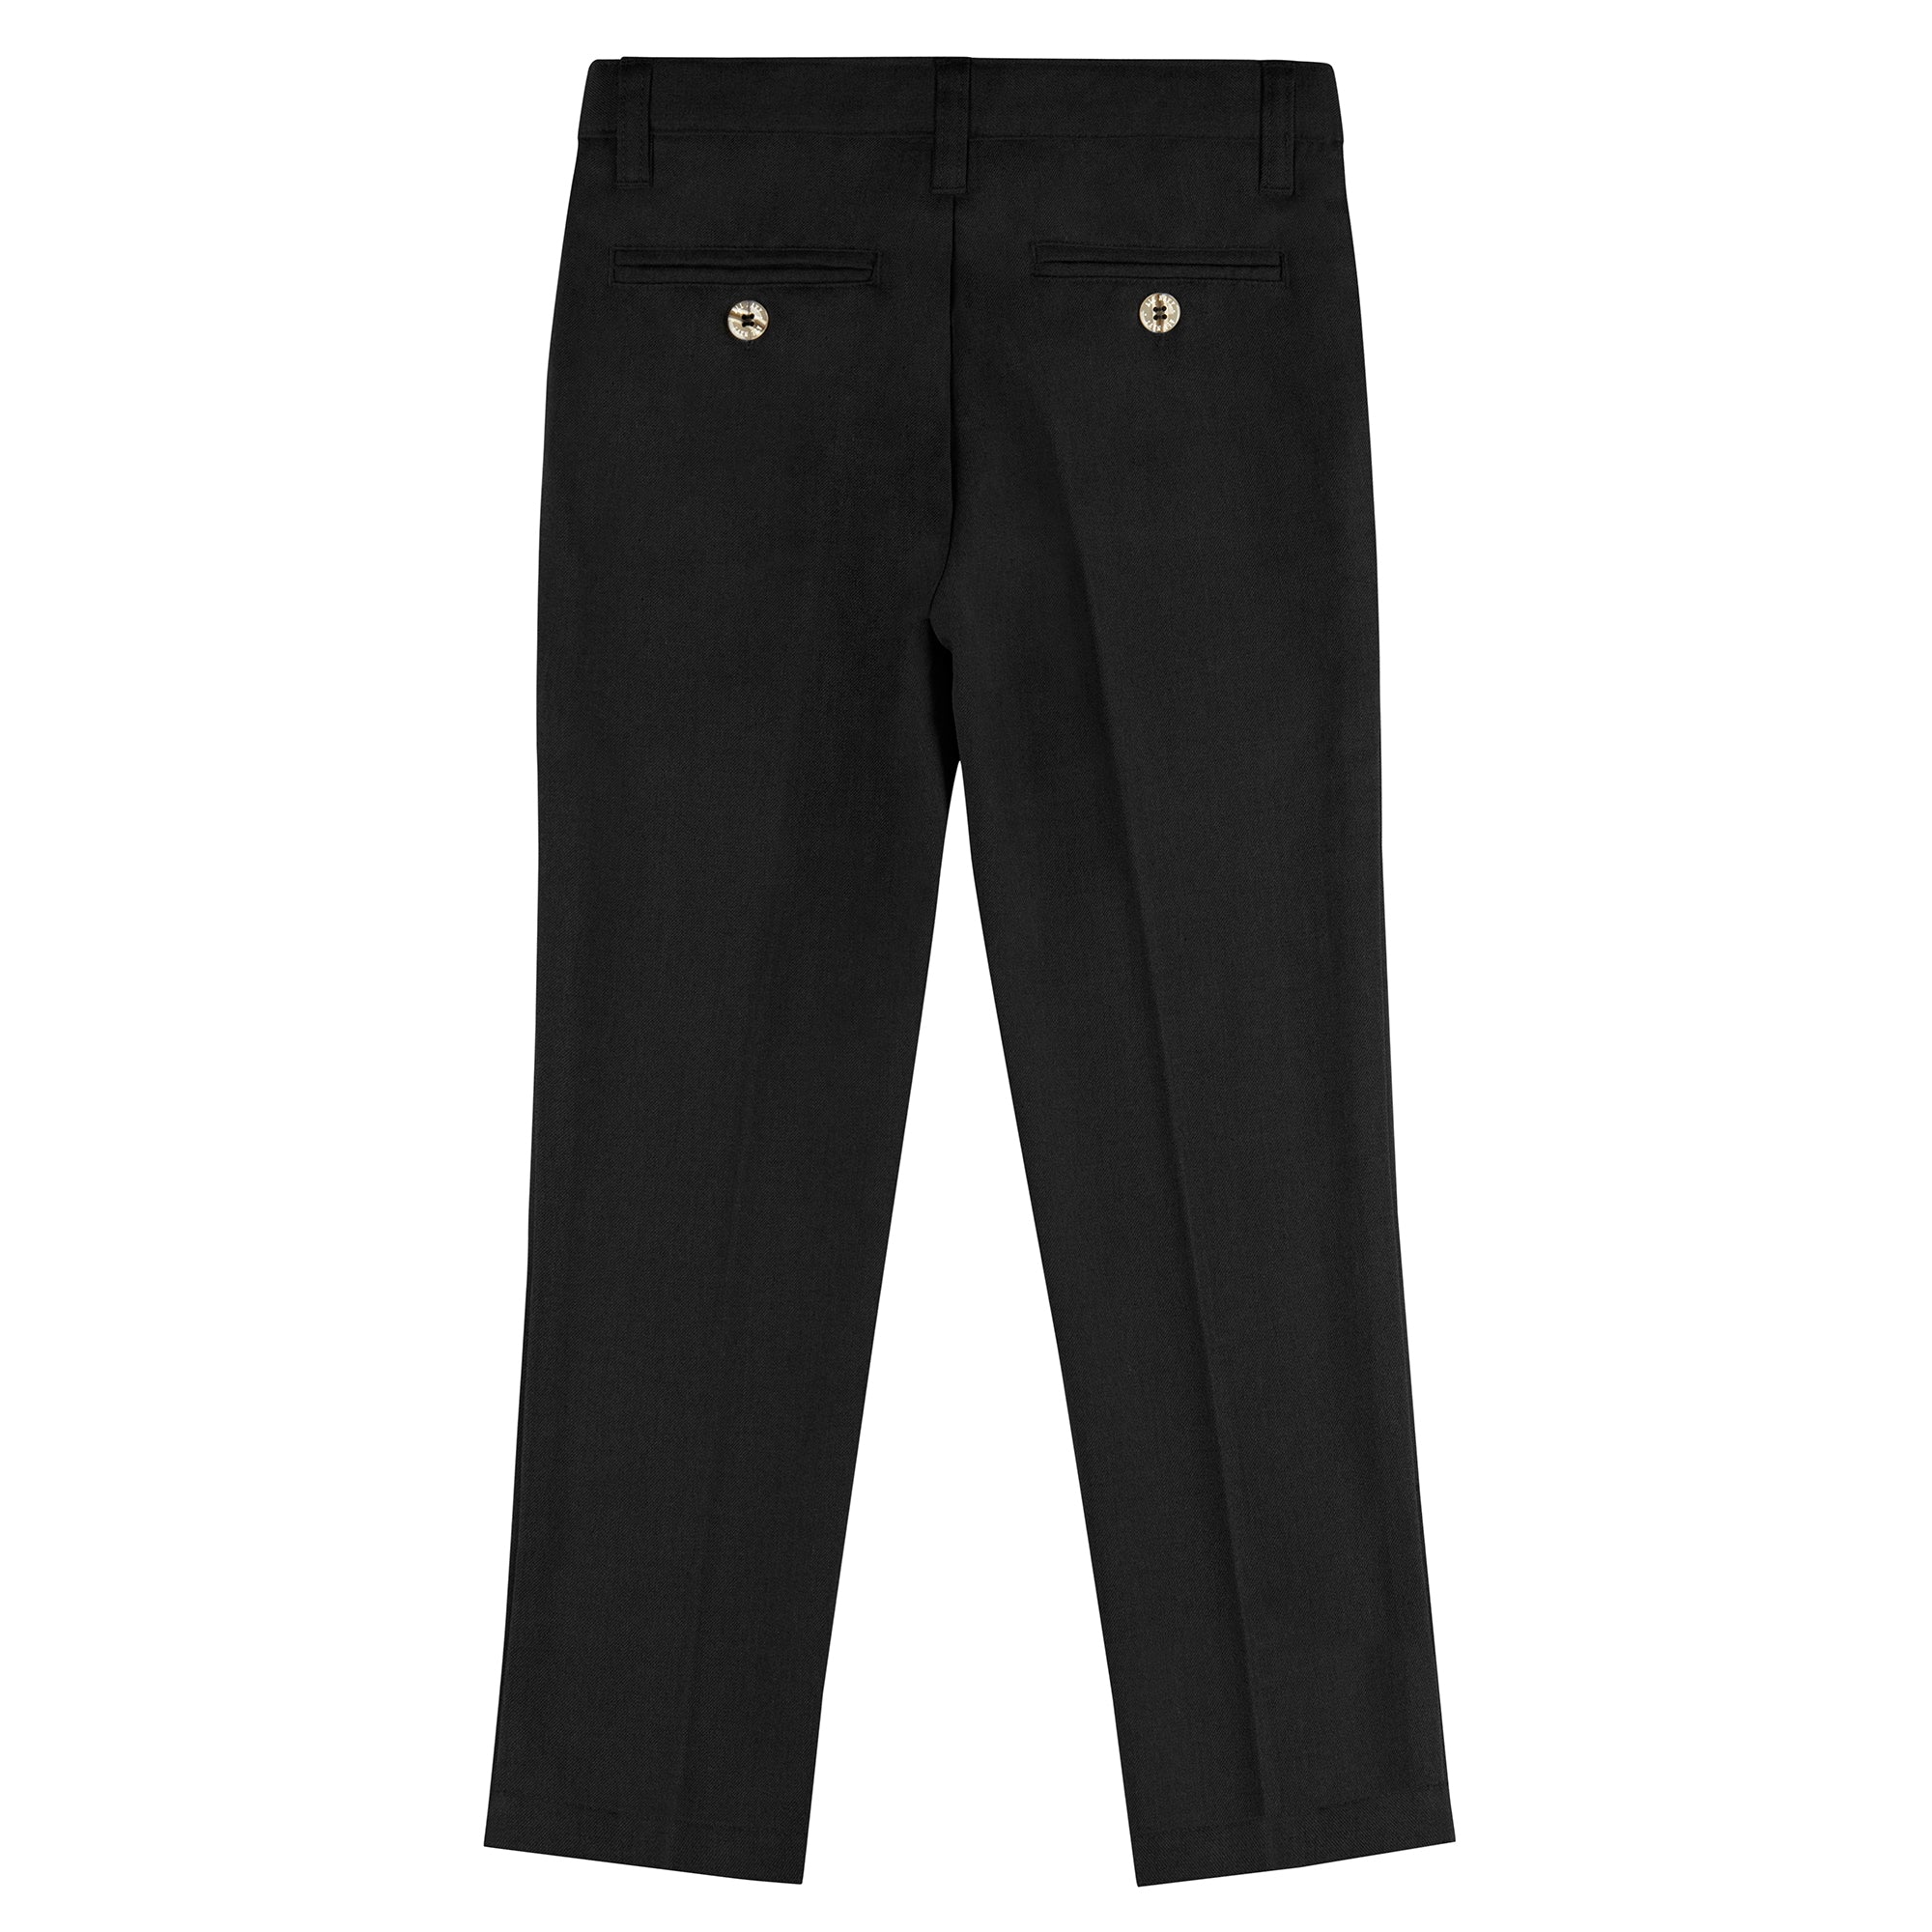 Black Slim Fit Shabbos Pants – All Navy